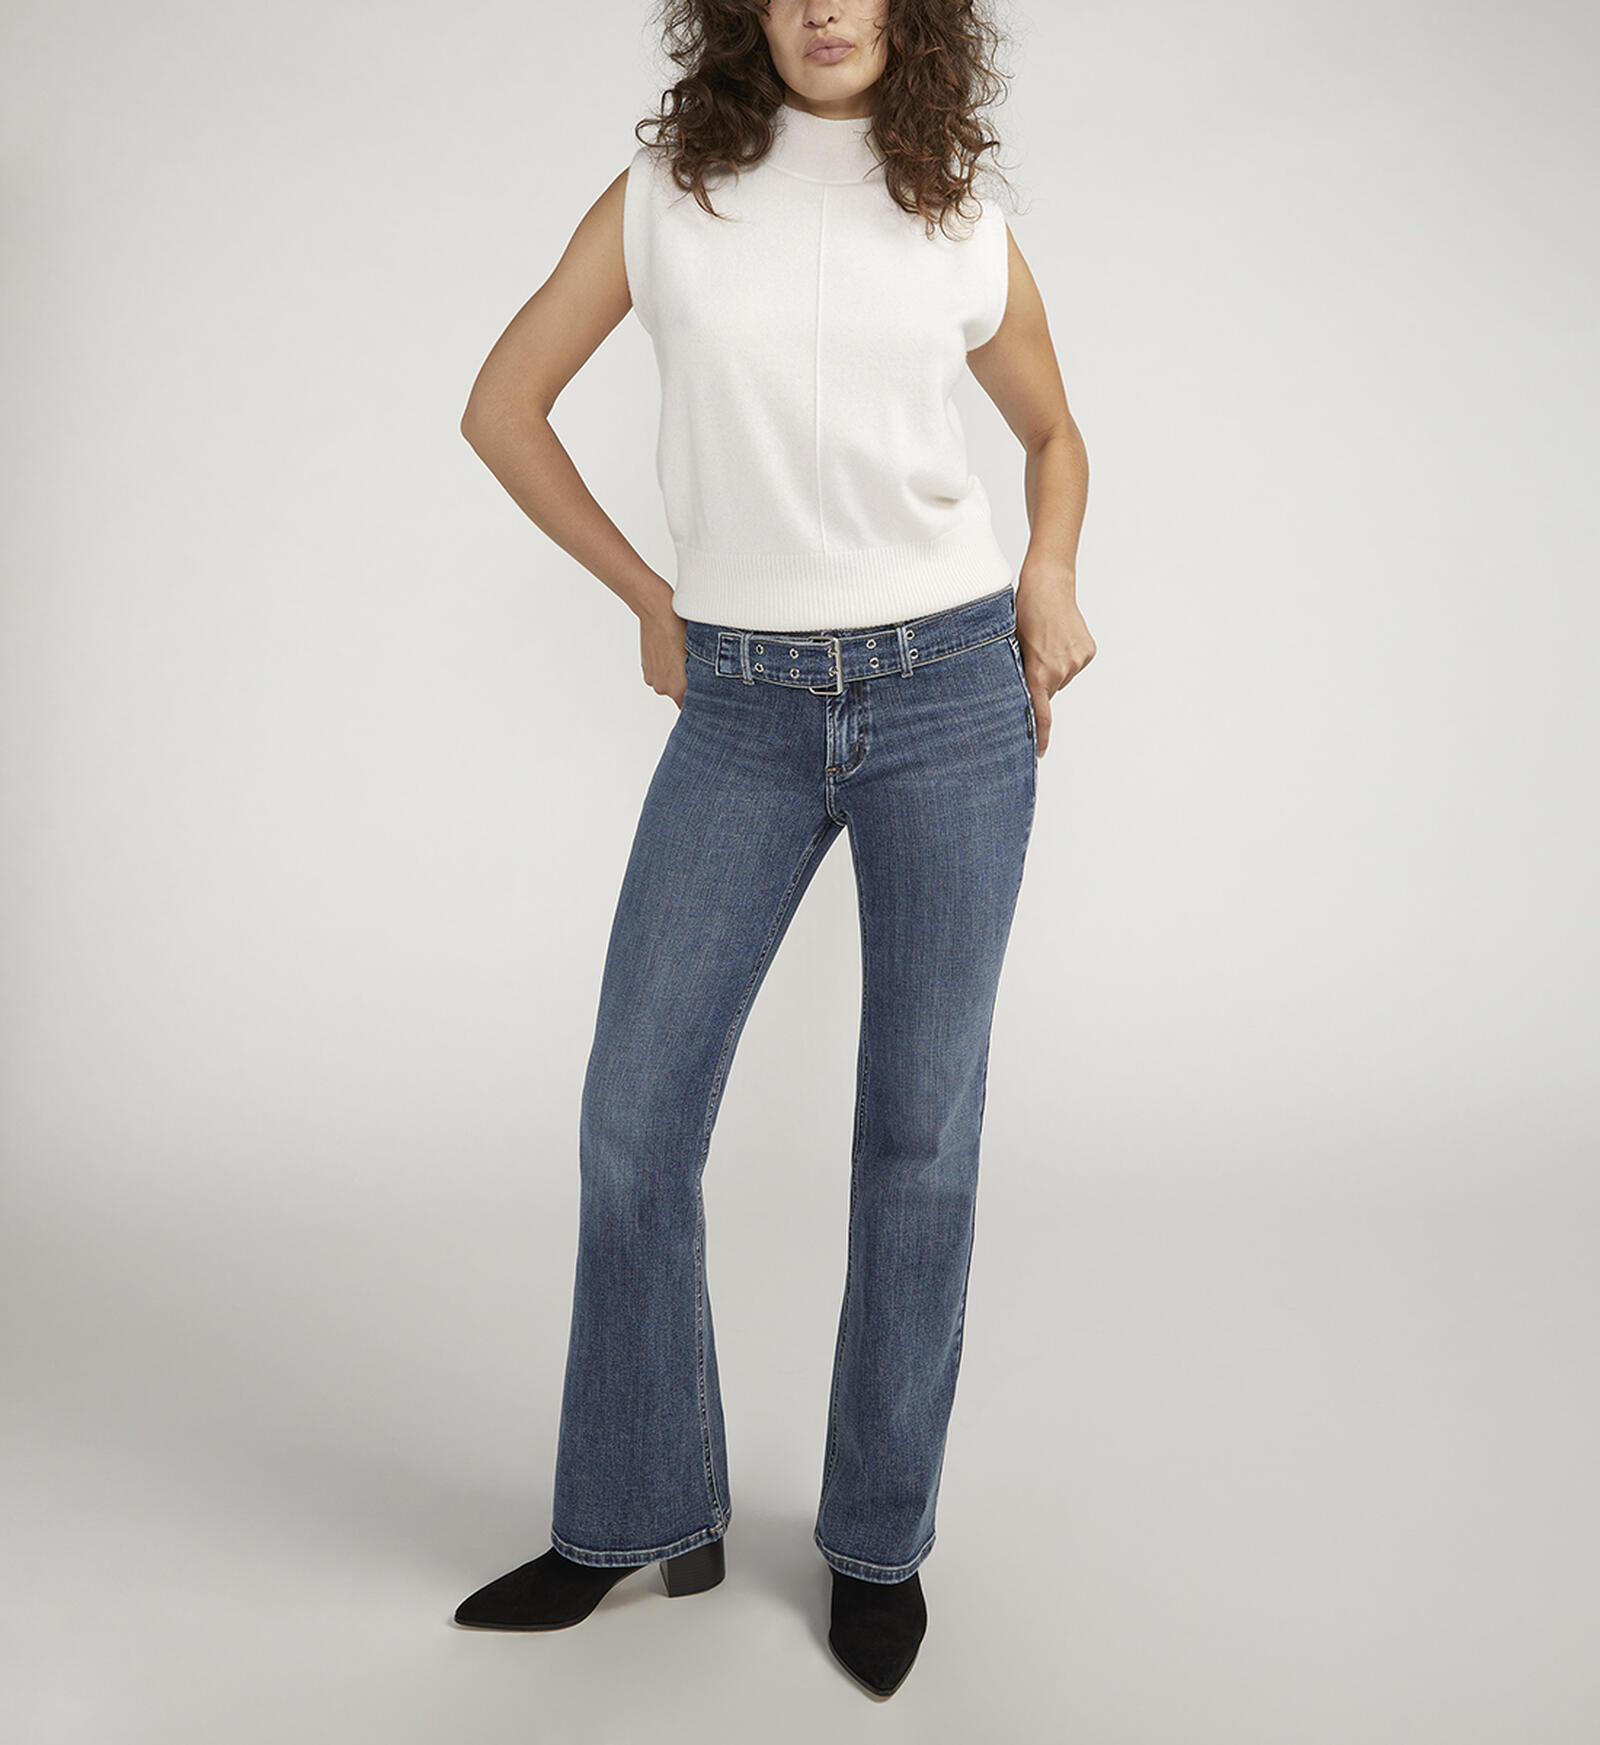 Women's Low-Rise Medium Wash Flare Jeans